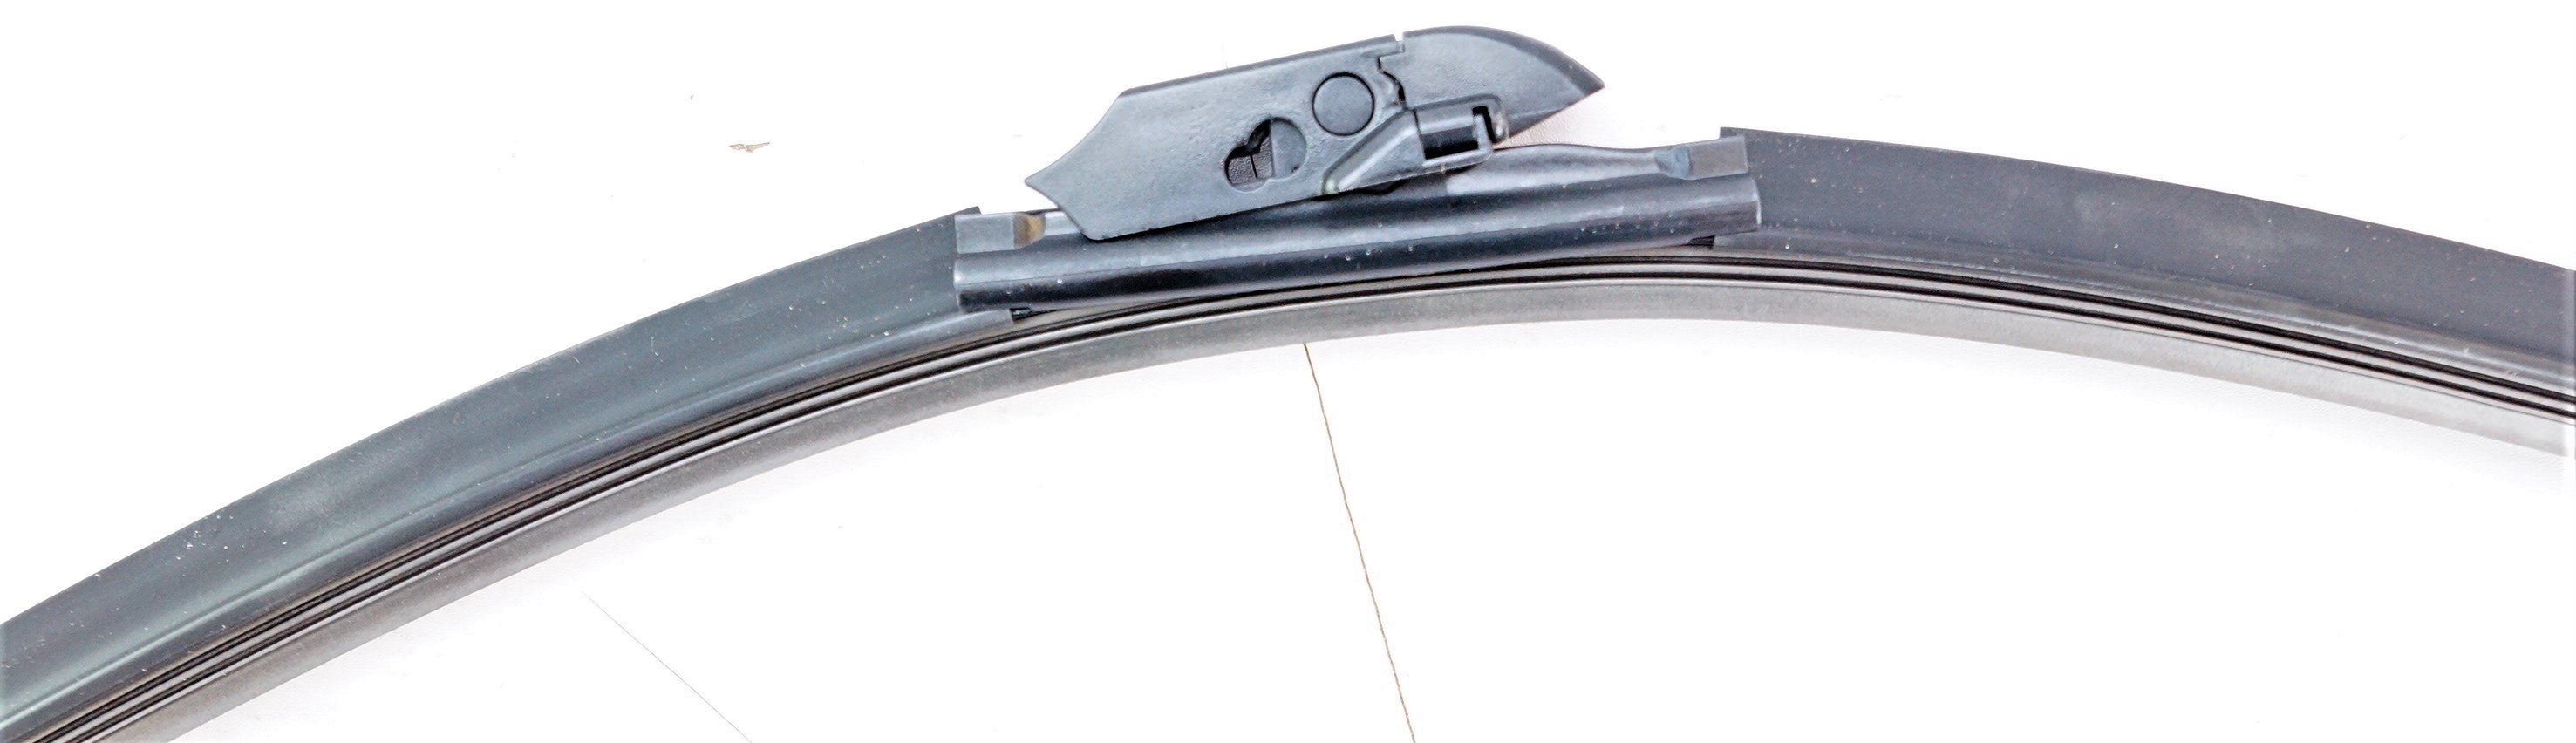 New Michelin 20â€ Radius Premium Beam w/ Frameless Curved Design Wiper Blade - image 9